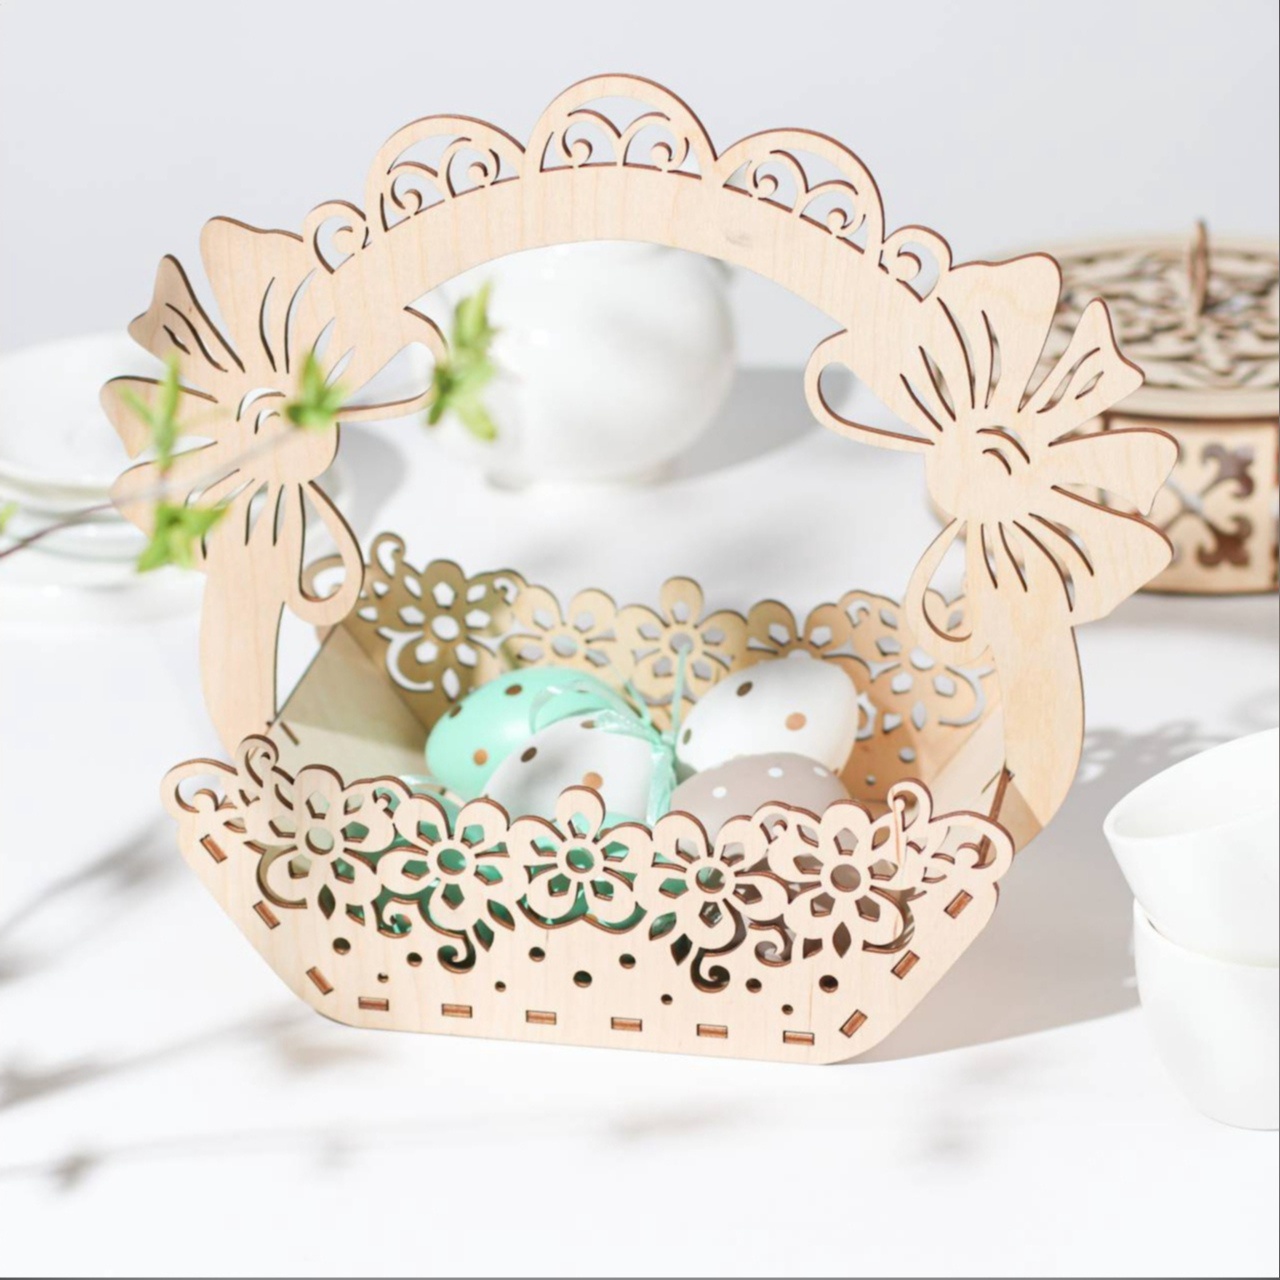 Laser Cut Decorative Candy Basket Gourmet Chocolate Easter Gift Basket Free CDR Vectors Art